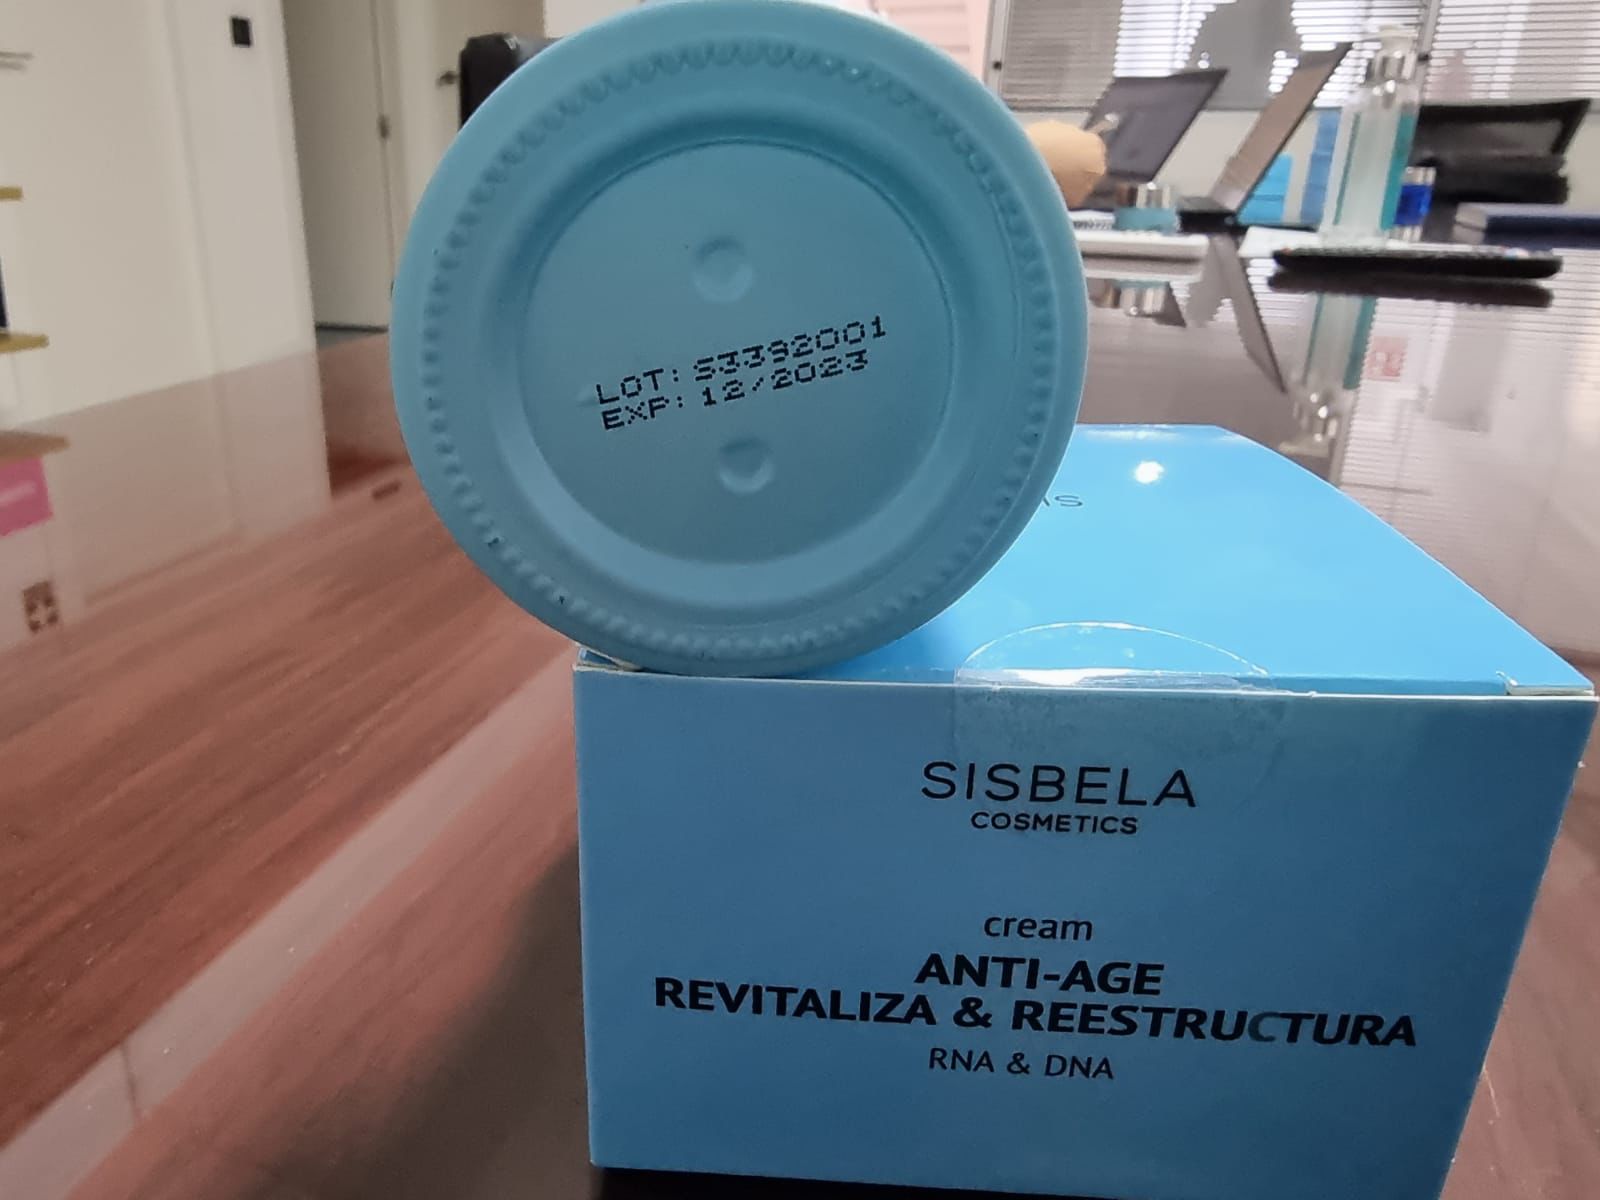 46662 - SISBELA cosmetics in Stock Europe